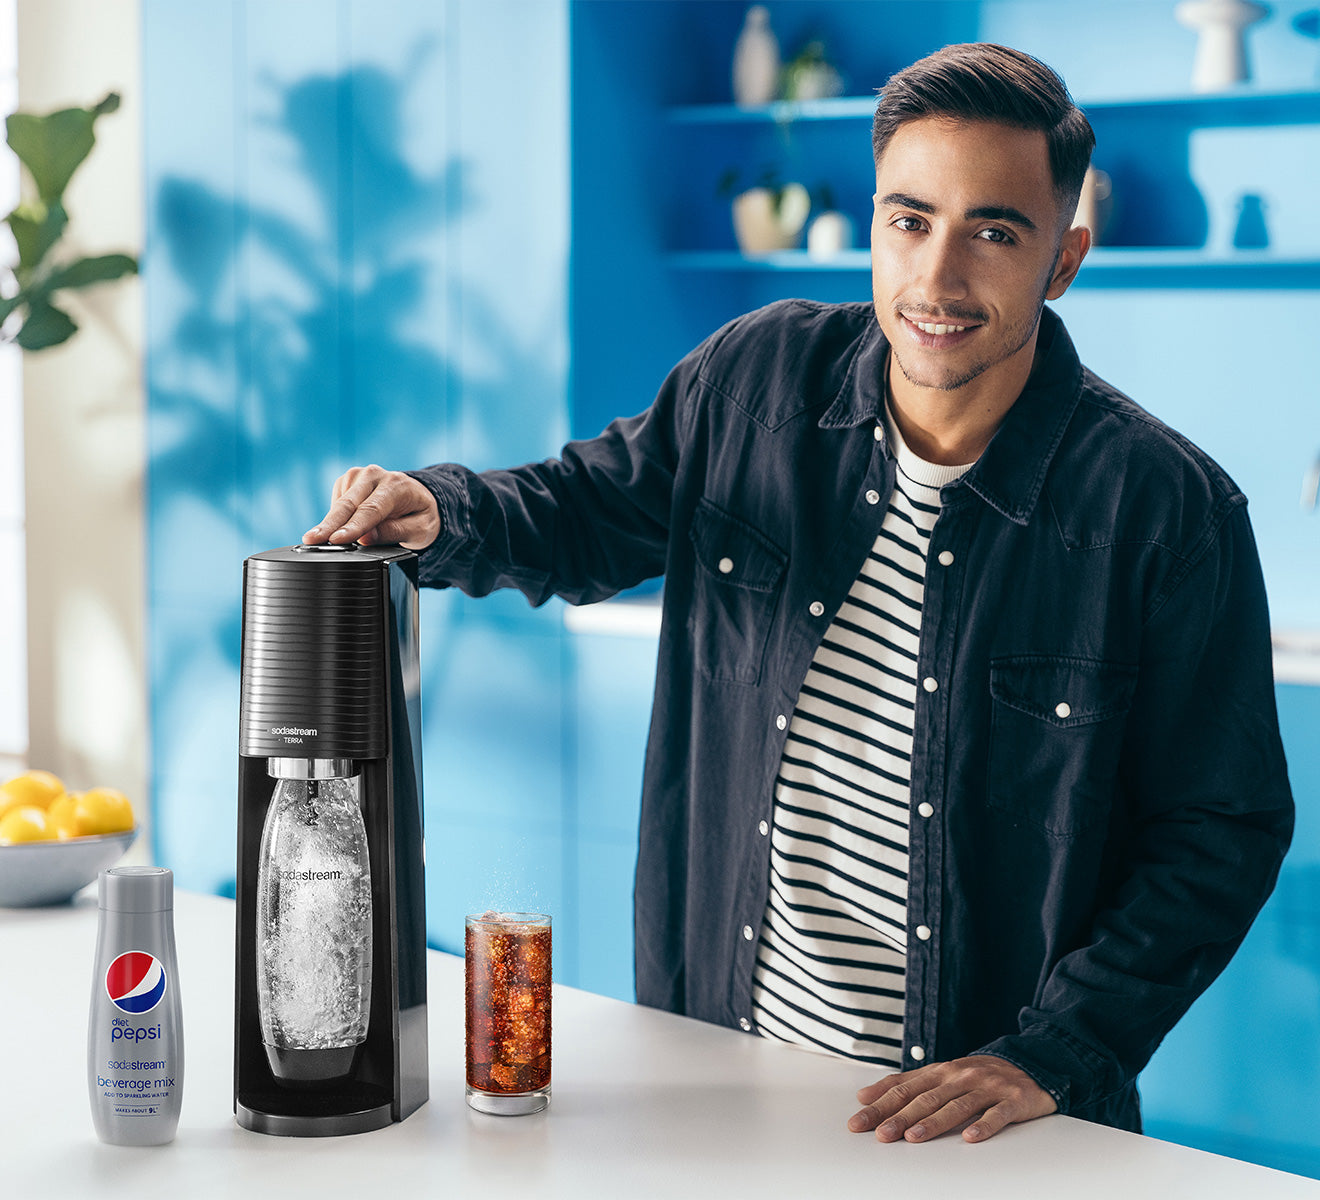 SodaStream Pepsi Zero Sugar Beverage Mix, 440ml - Best Buy